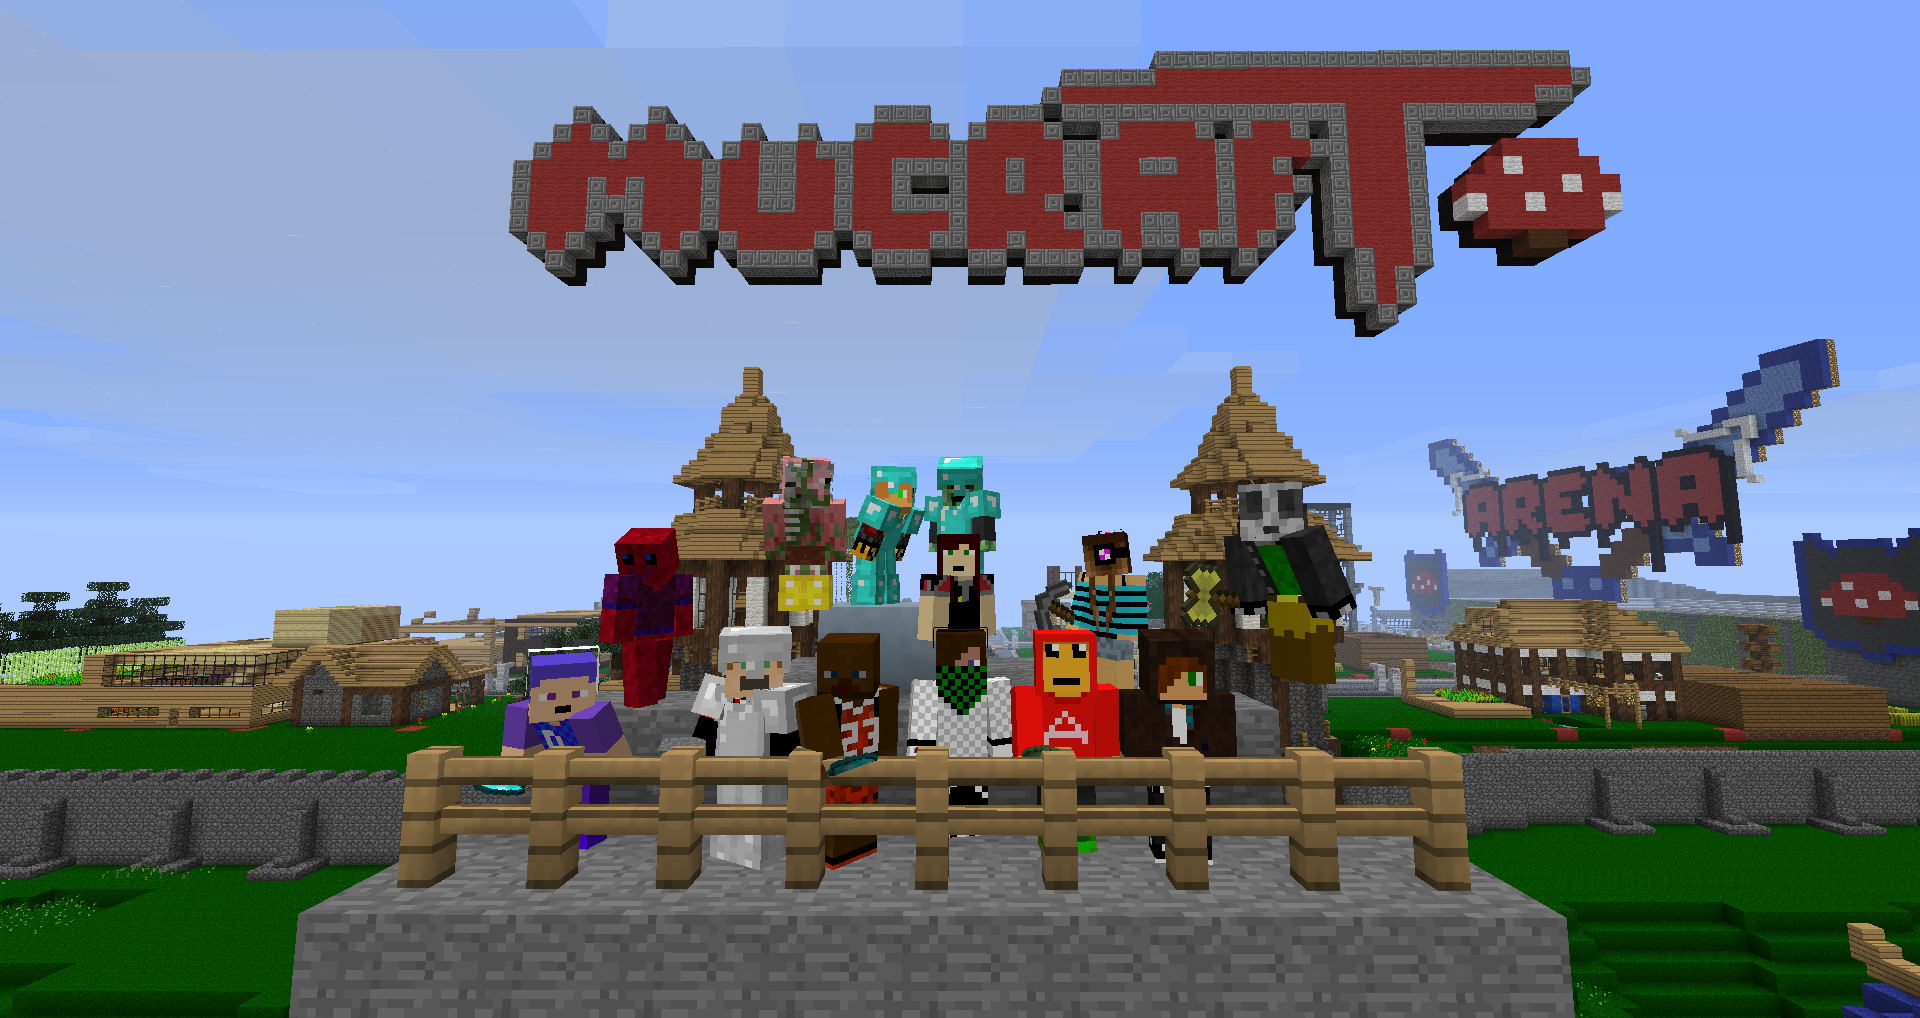 Screenshot from the minecraft server MuCraft 2012